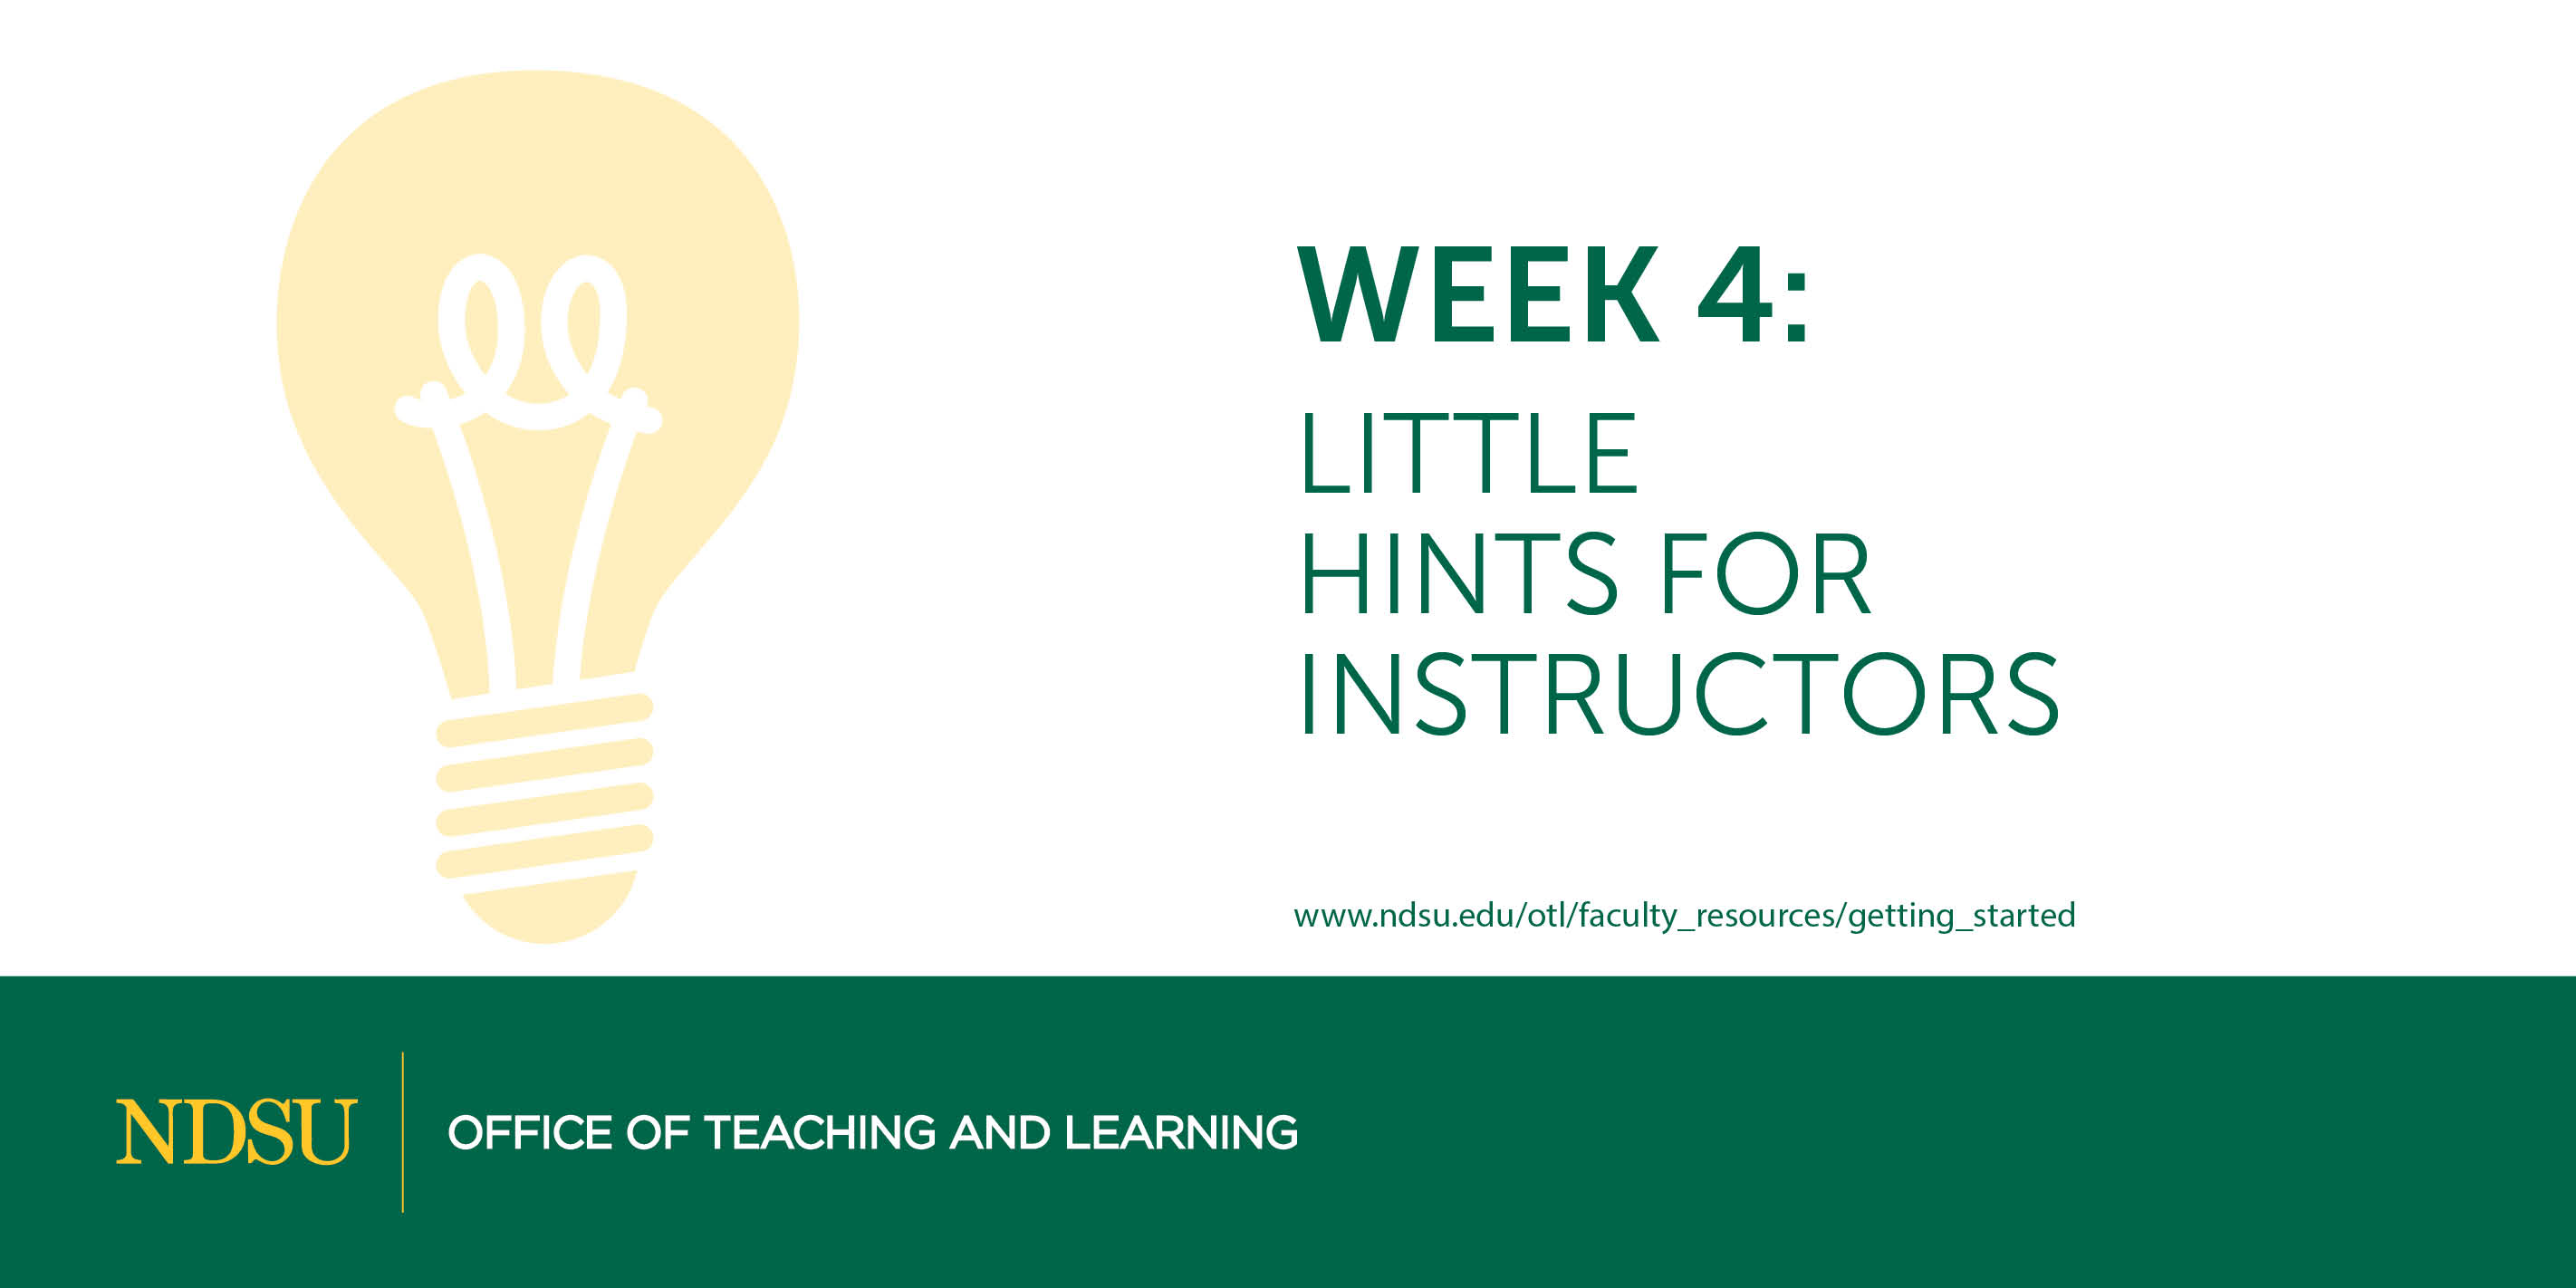 Week 4 Little Hints for Instructors